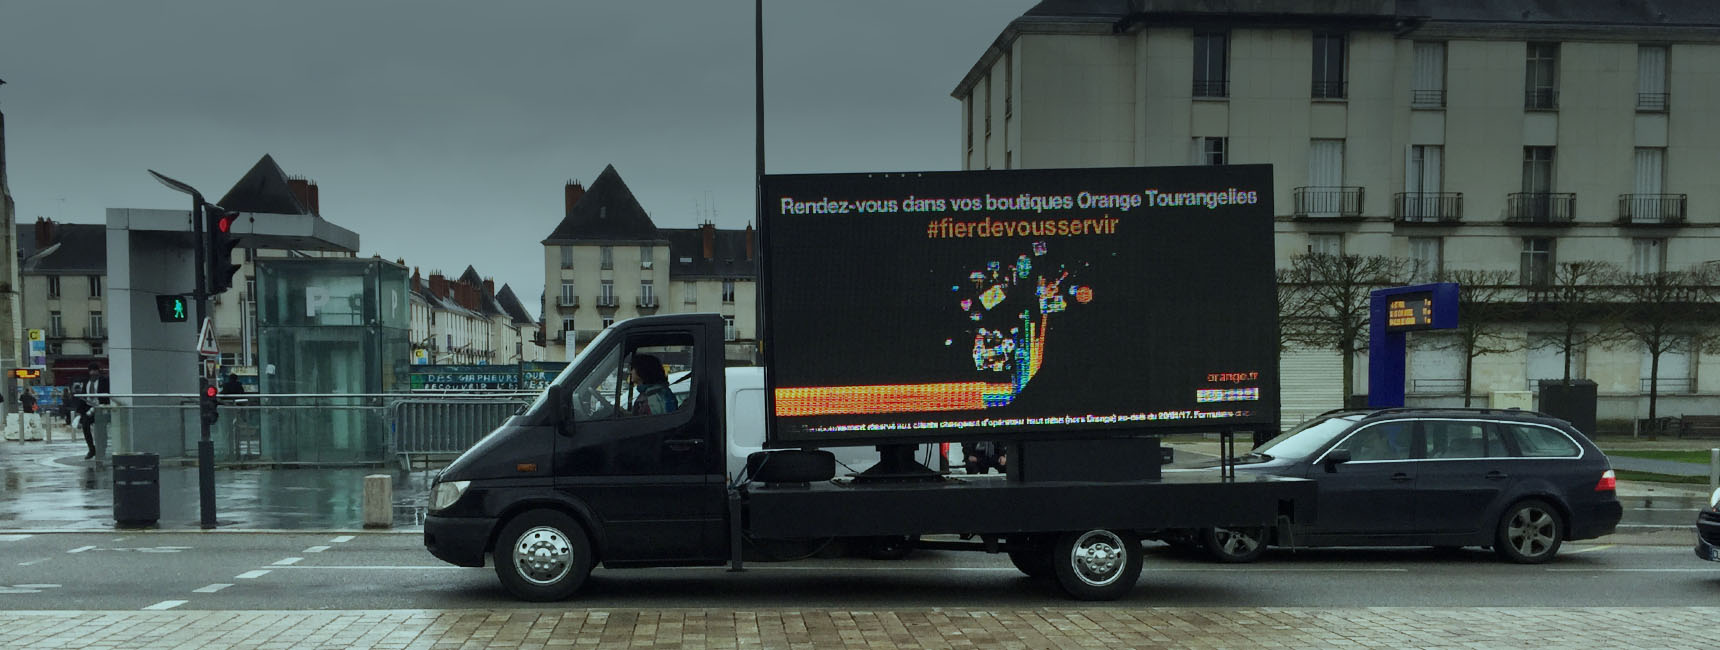 Dispositifs d'affichage mobile - Keemia Lyon Agence marketing local en région Rhône-Alpes